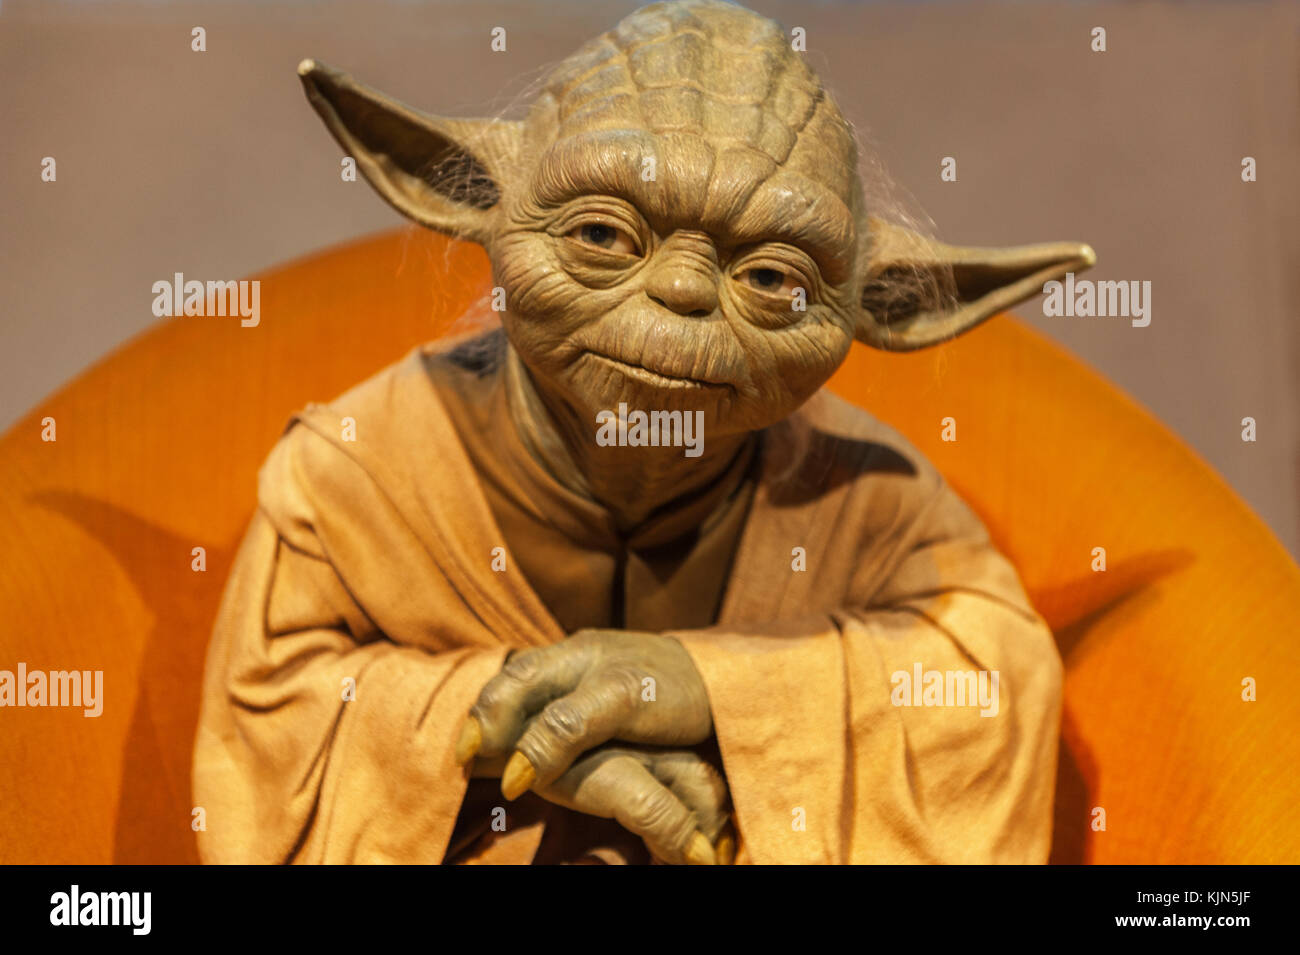 Master Yoda wax figure in Madame Tussaud's museum. Berlin, Germany Stock Photo